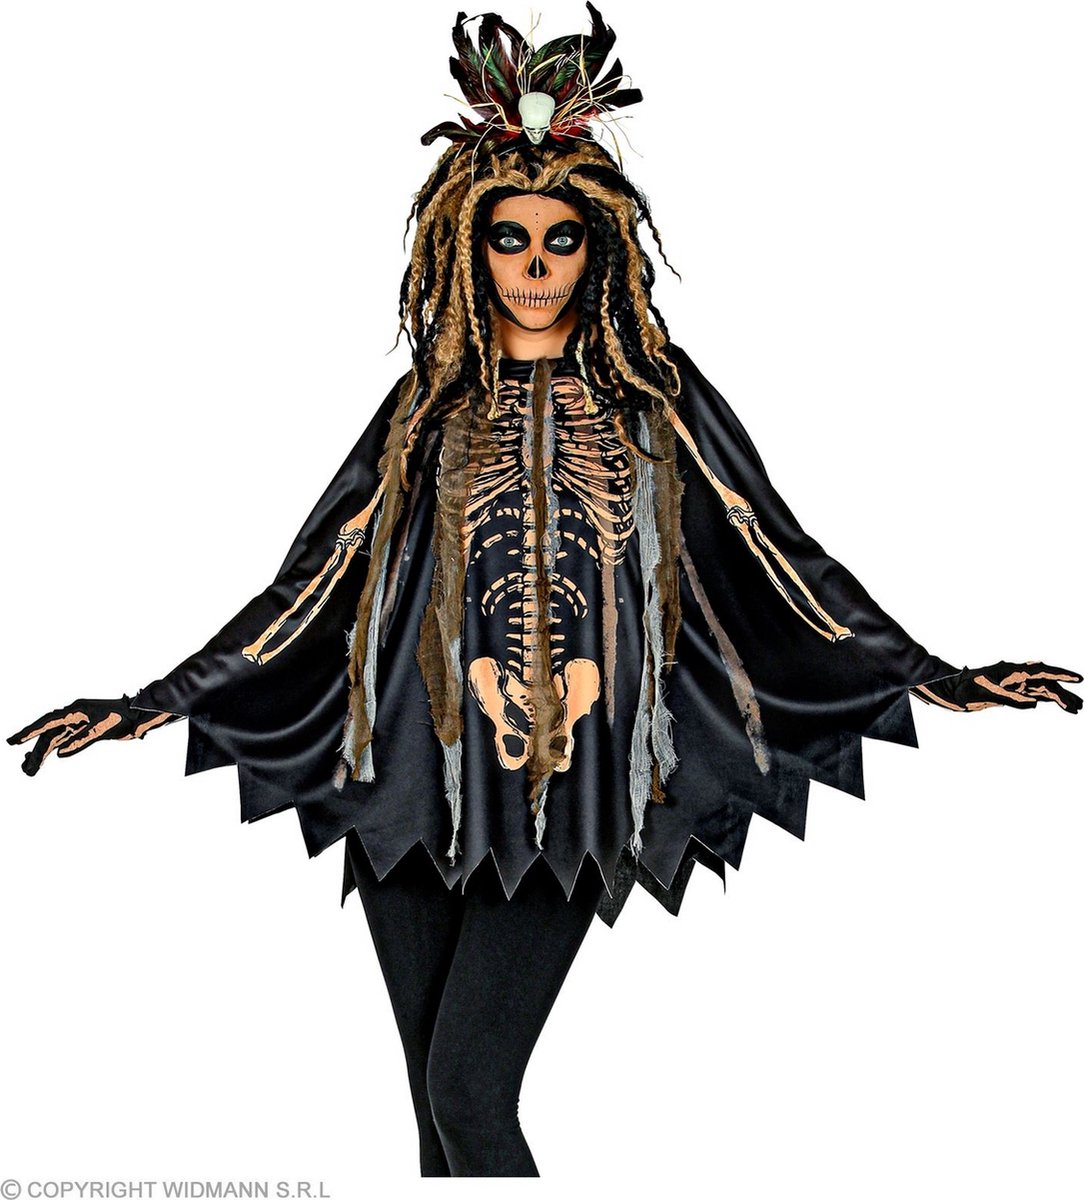 Widmann - Heks & Spider Lady & Voodoo & Duistere Religie Kostuum - Voodoo Priester Mikayla Poncho - zwart - One Size - Halloween - Verkleedkleding